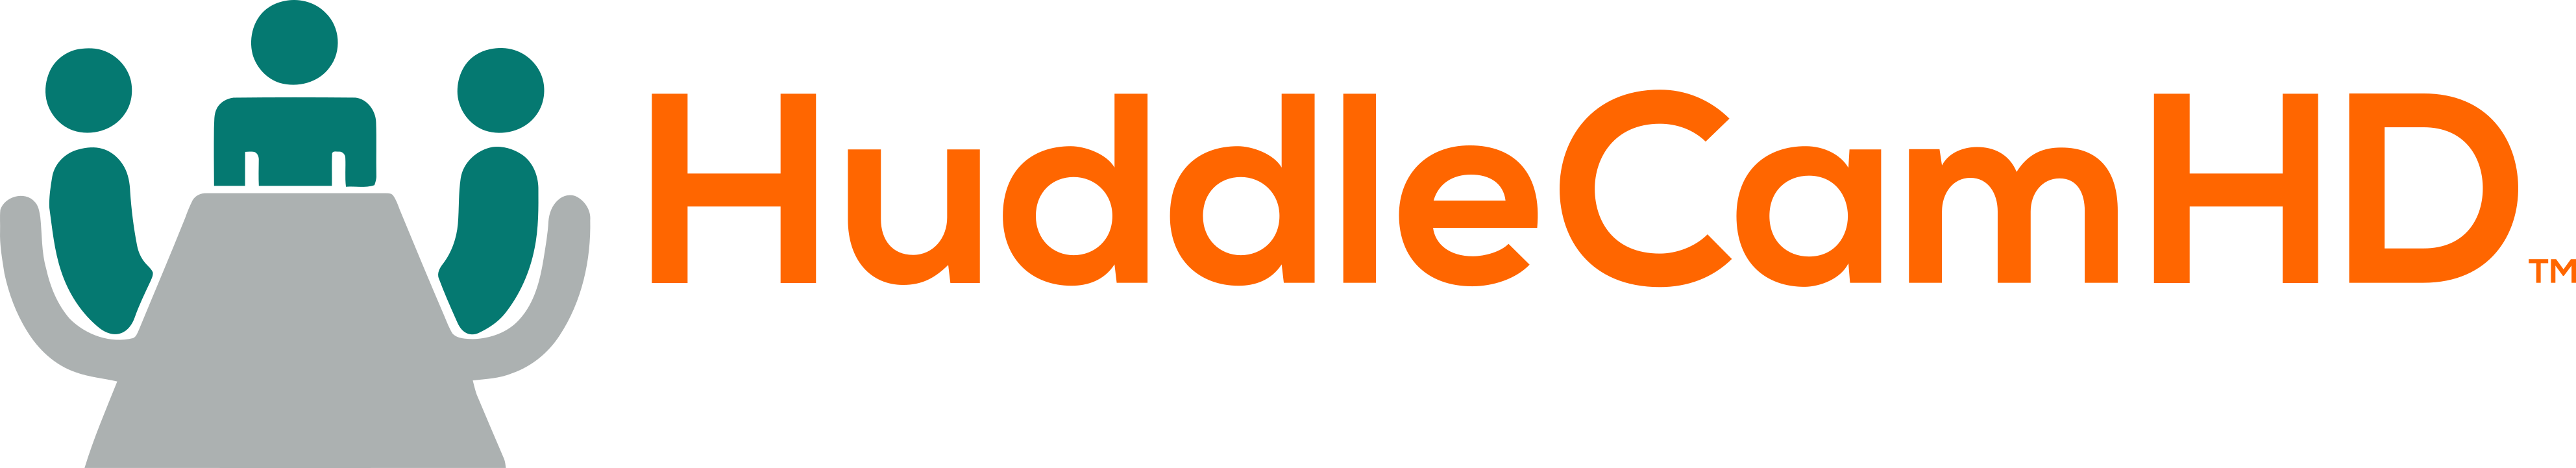 HuddleCamHD Logo